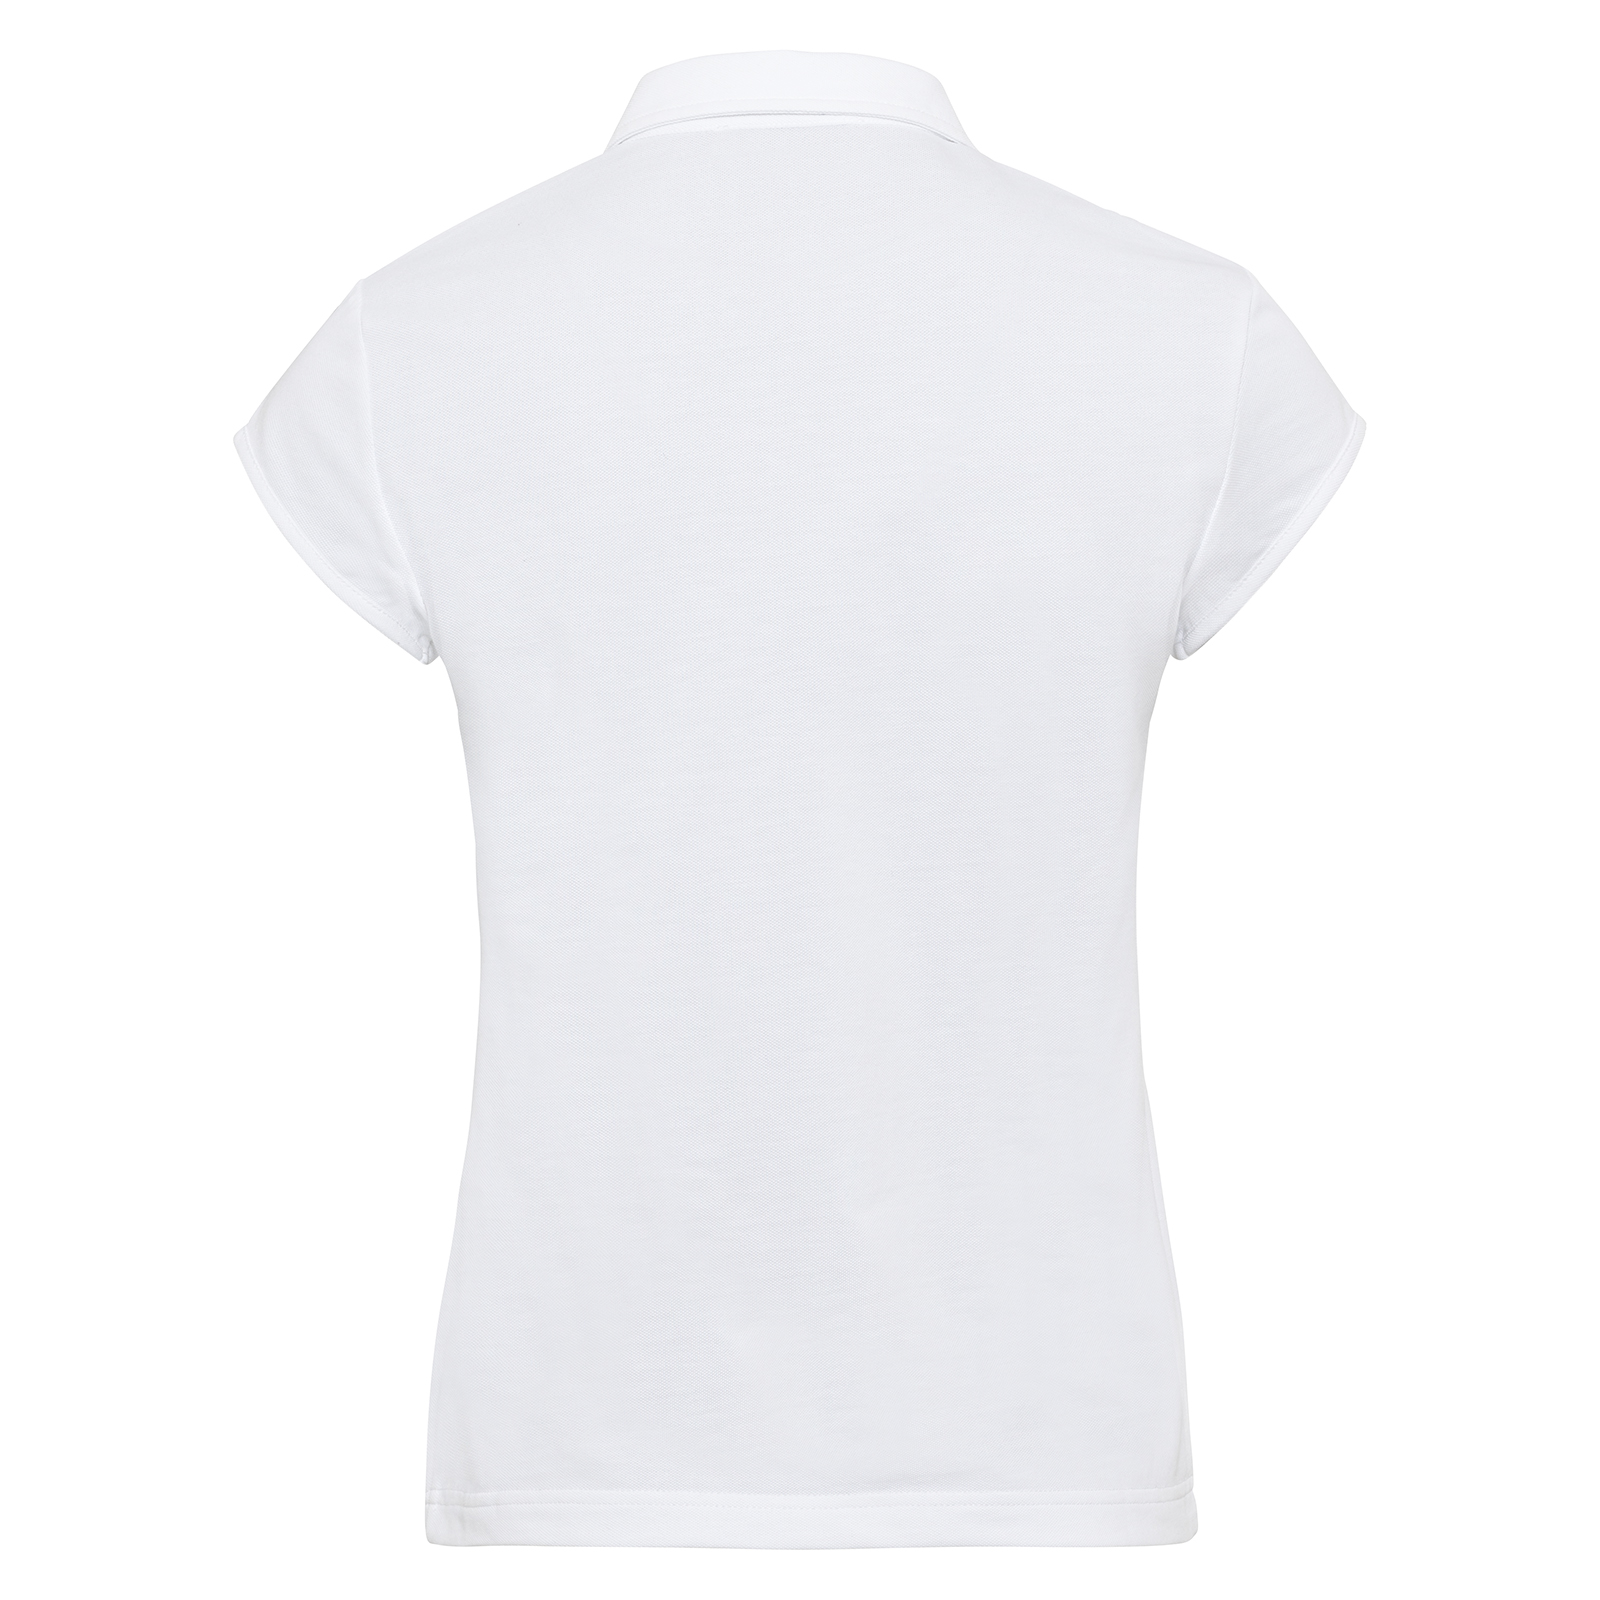 Ladies' golf shirt with high-tech SEAQUAL® fibre